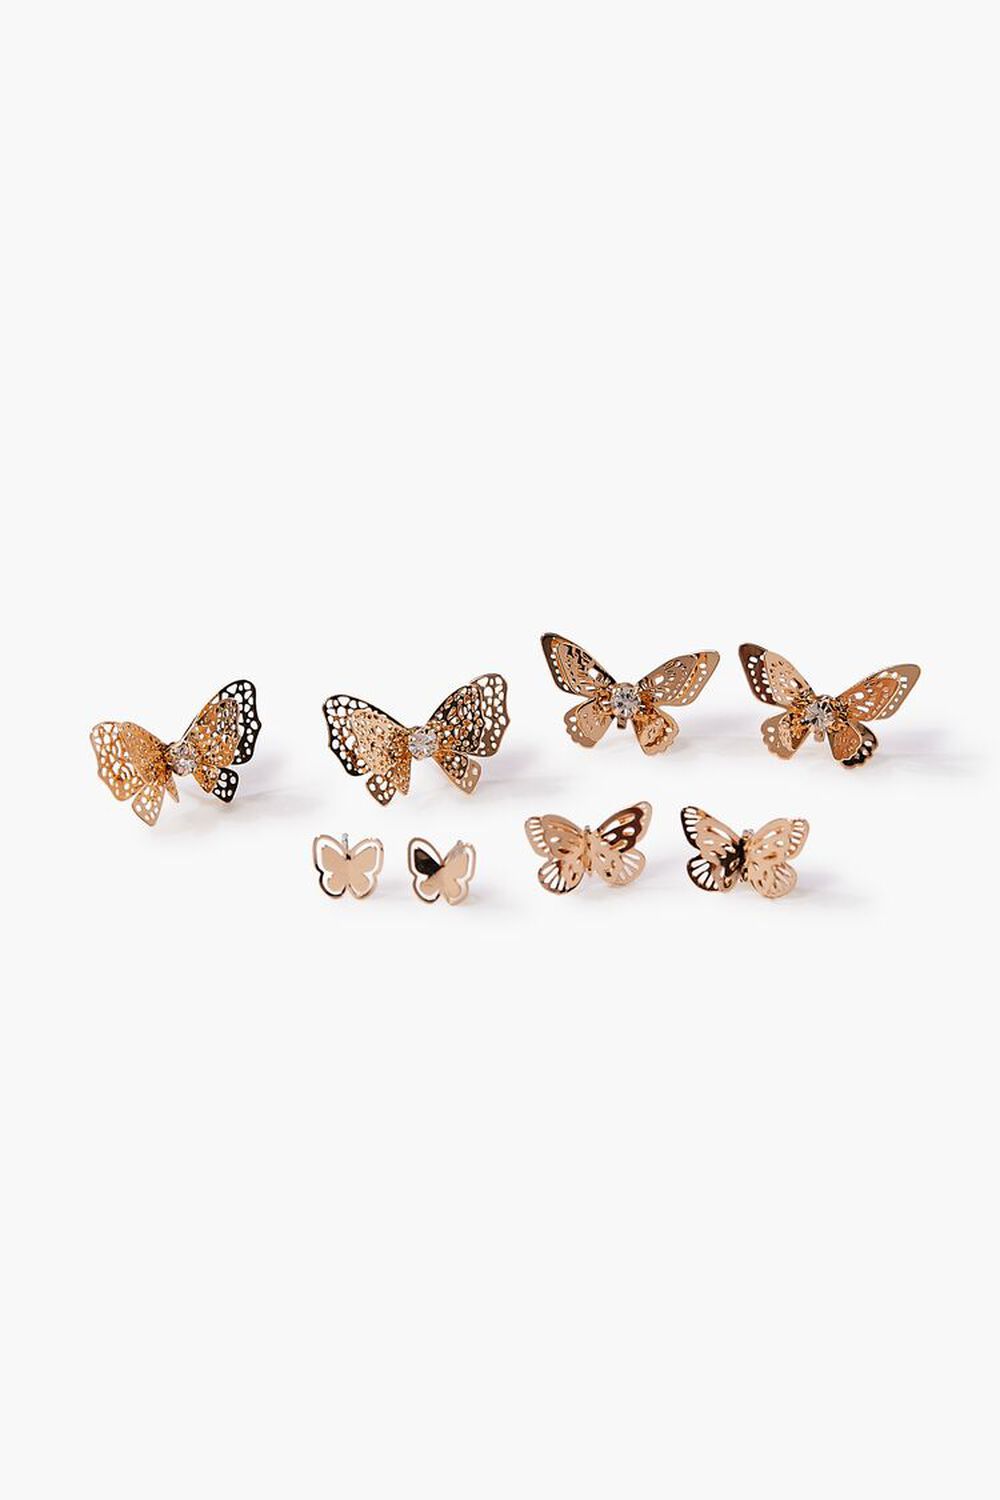 GOLD Butterfly Stud Earring Set, image 1